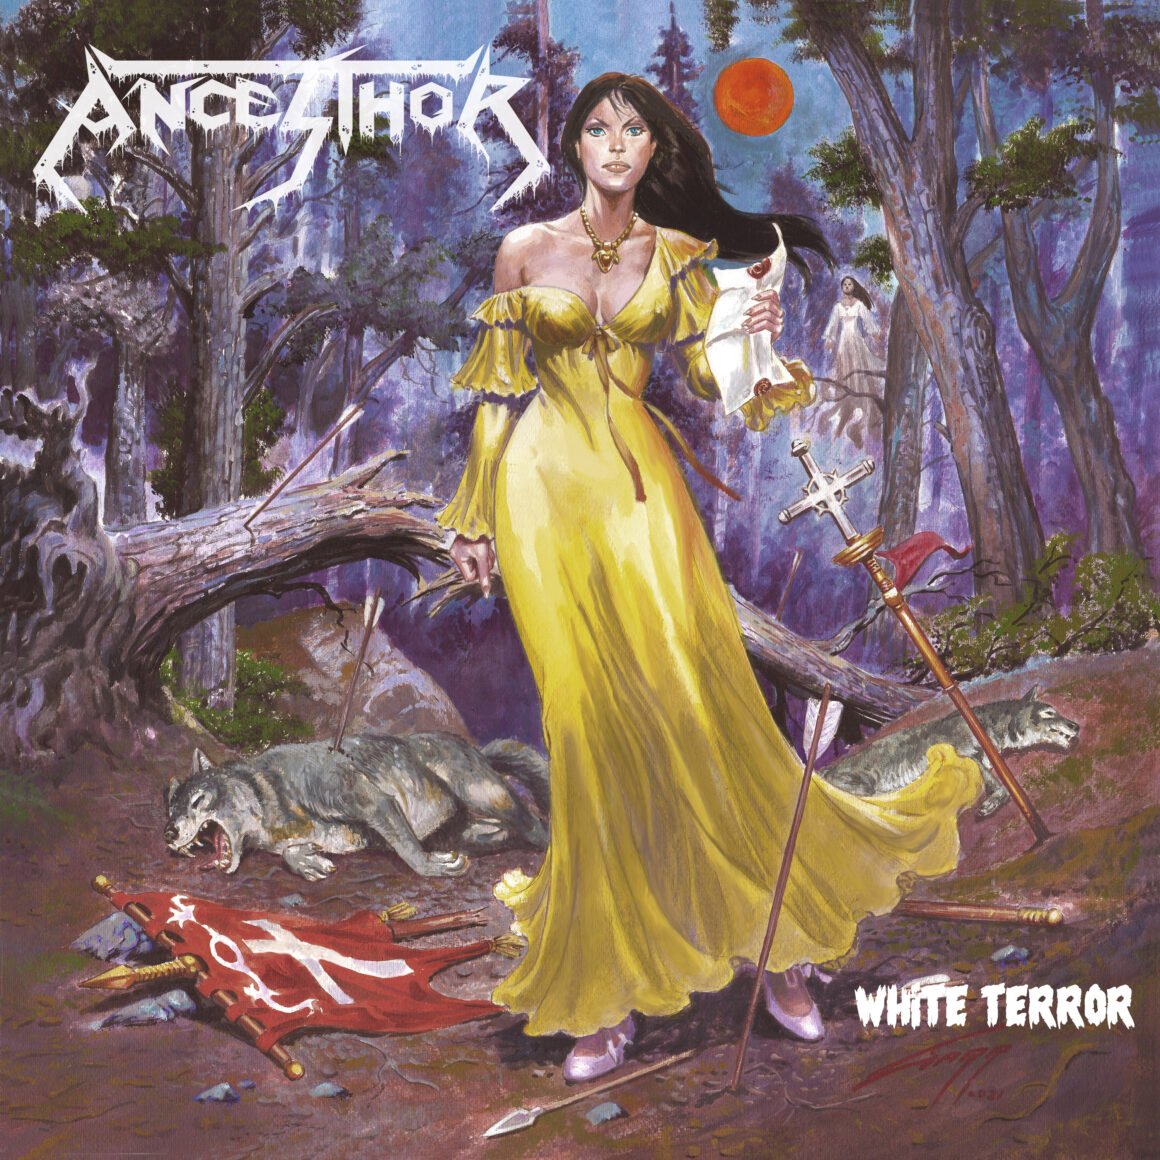 White terror Ancesthor - "White Terror" Summa Inferno | Metal + Rock & Alternative Music